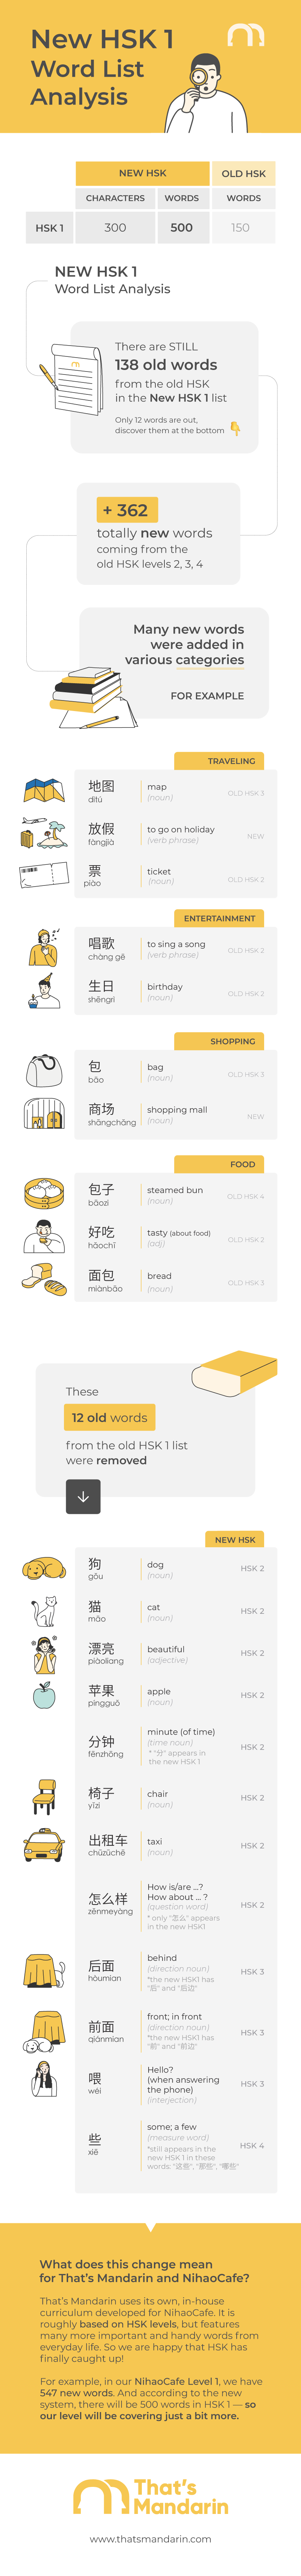 New HSK1 Word List Infographic & Analysis 2021 | That's Mandarin Chinese Language School